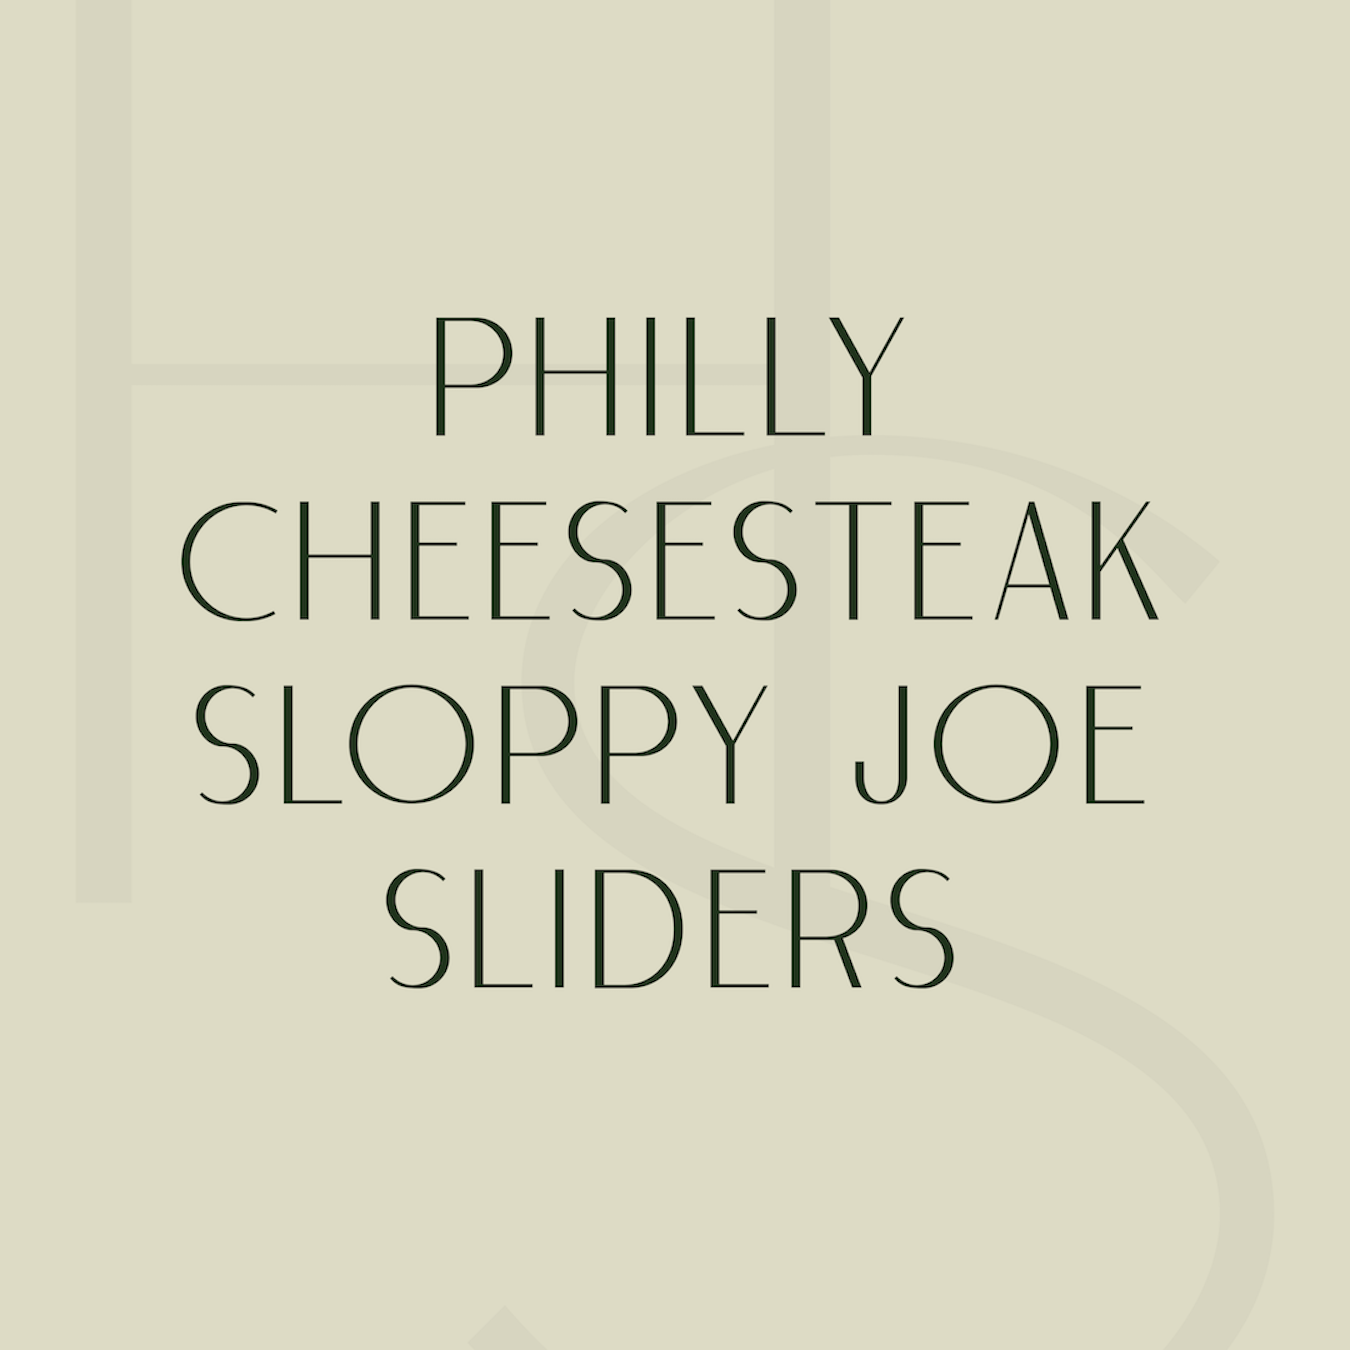 Philly Cheesesteak Sloppy Joe Sliders